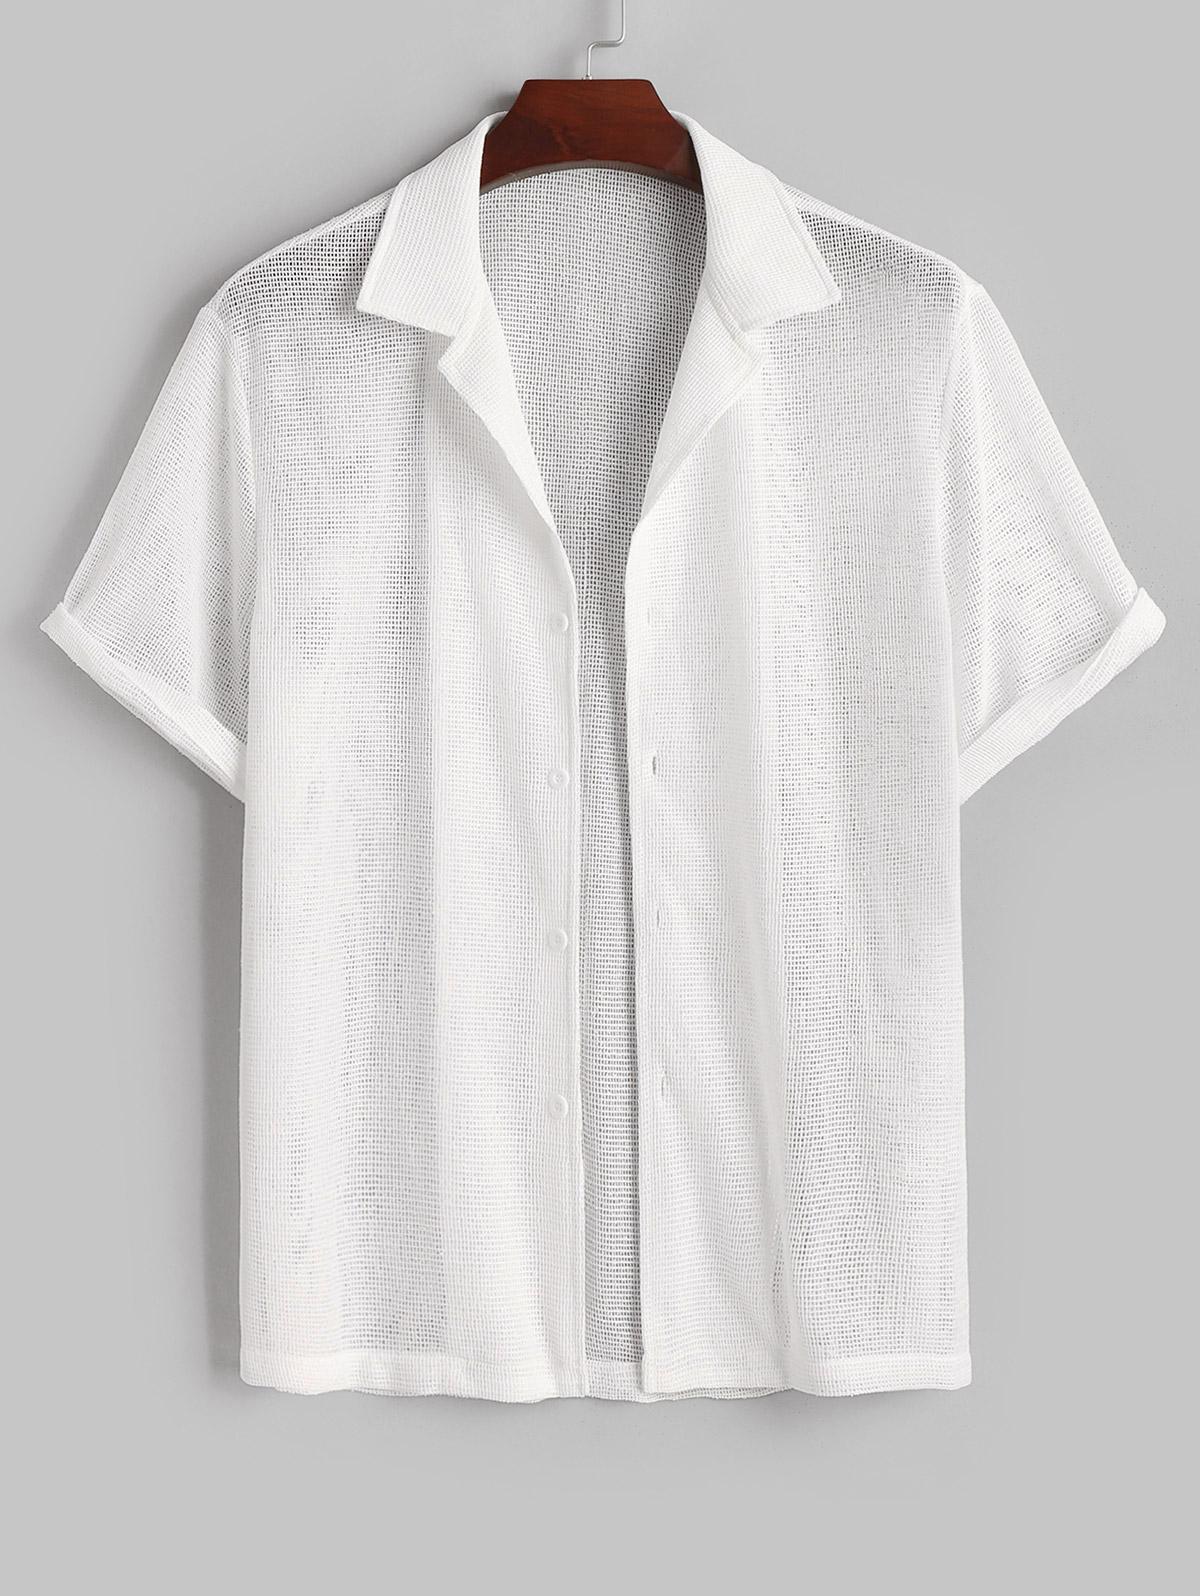 ZAFUL Men's ZAFUL See-through Hollow Out Beach Short Sleeves Shirt Xl White